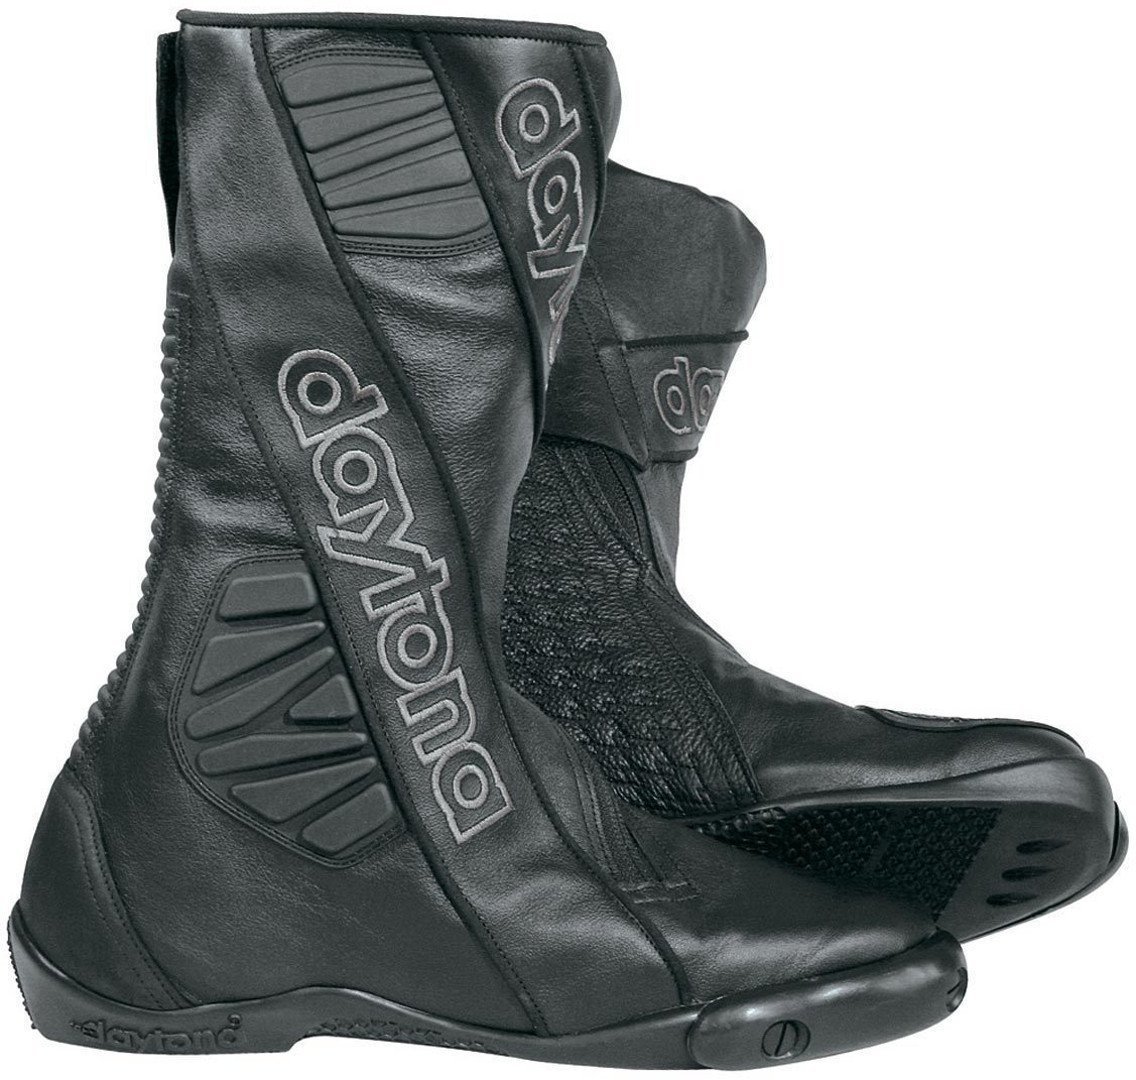 Daytona Security Evo G3 Motorcycle Boots, black, Size 40, black, Size 40